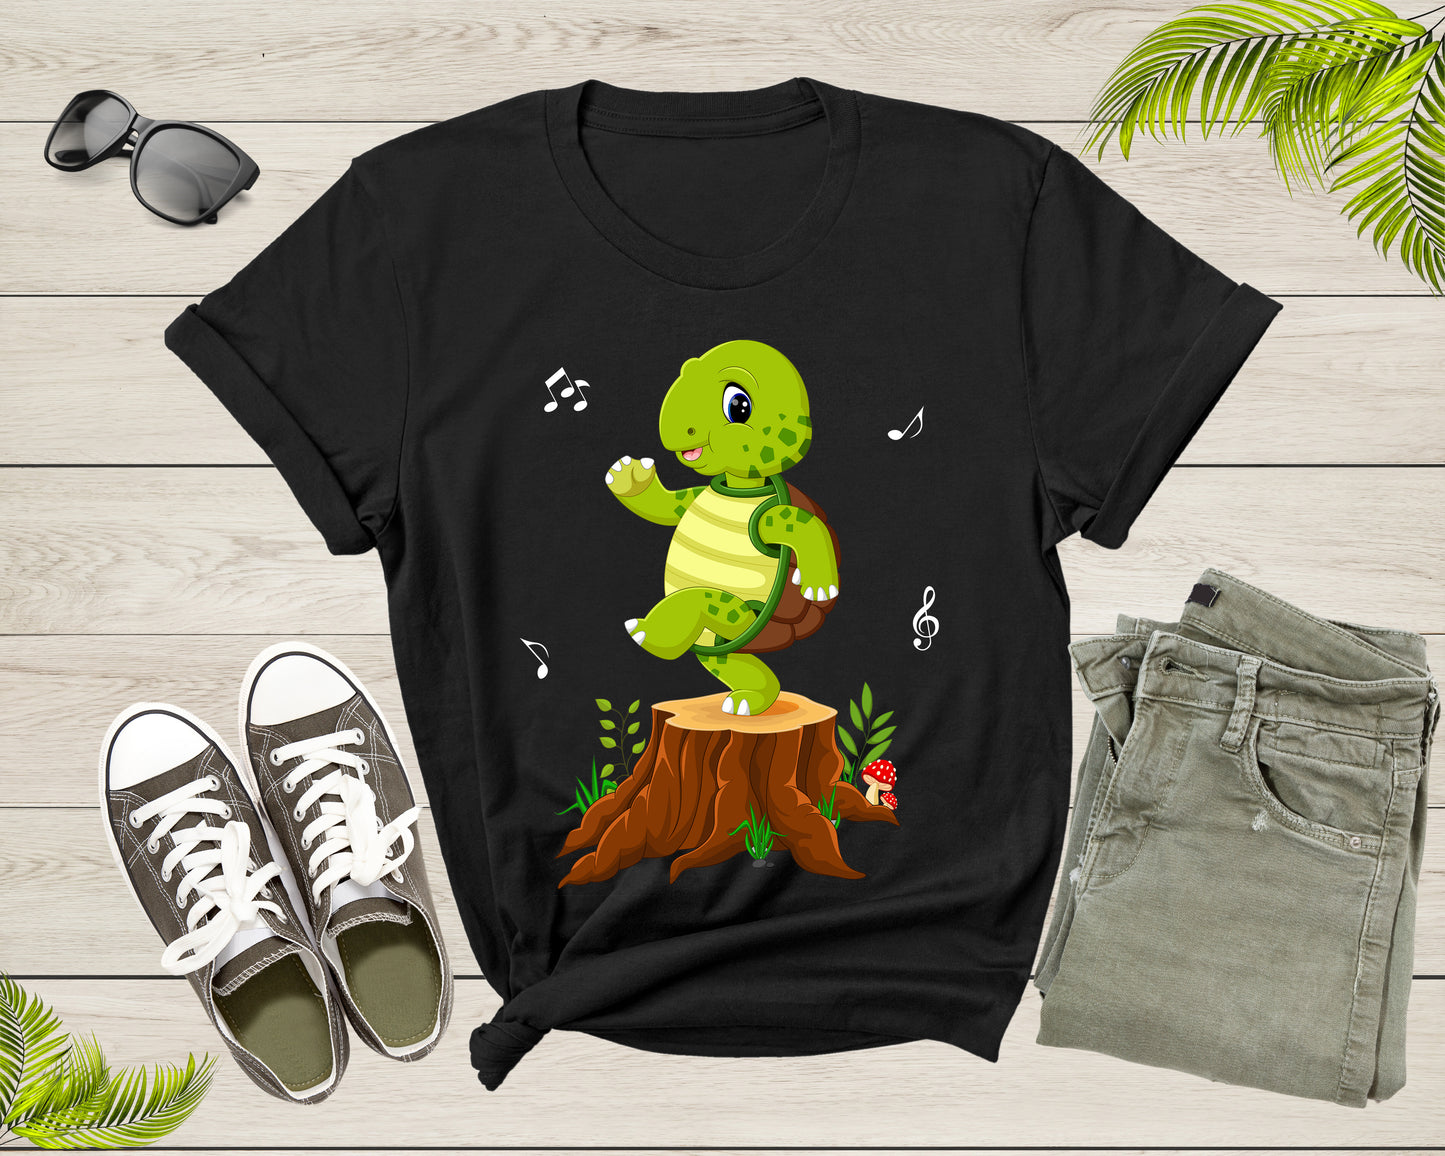 Cute Funny Green Dancing Turtle Tortoise on Brown Tree Root T-Shirt Turtle Lover Gift T Shirt for Men Women Kids Boys Girls Graphic Tshirt